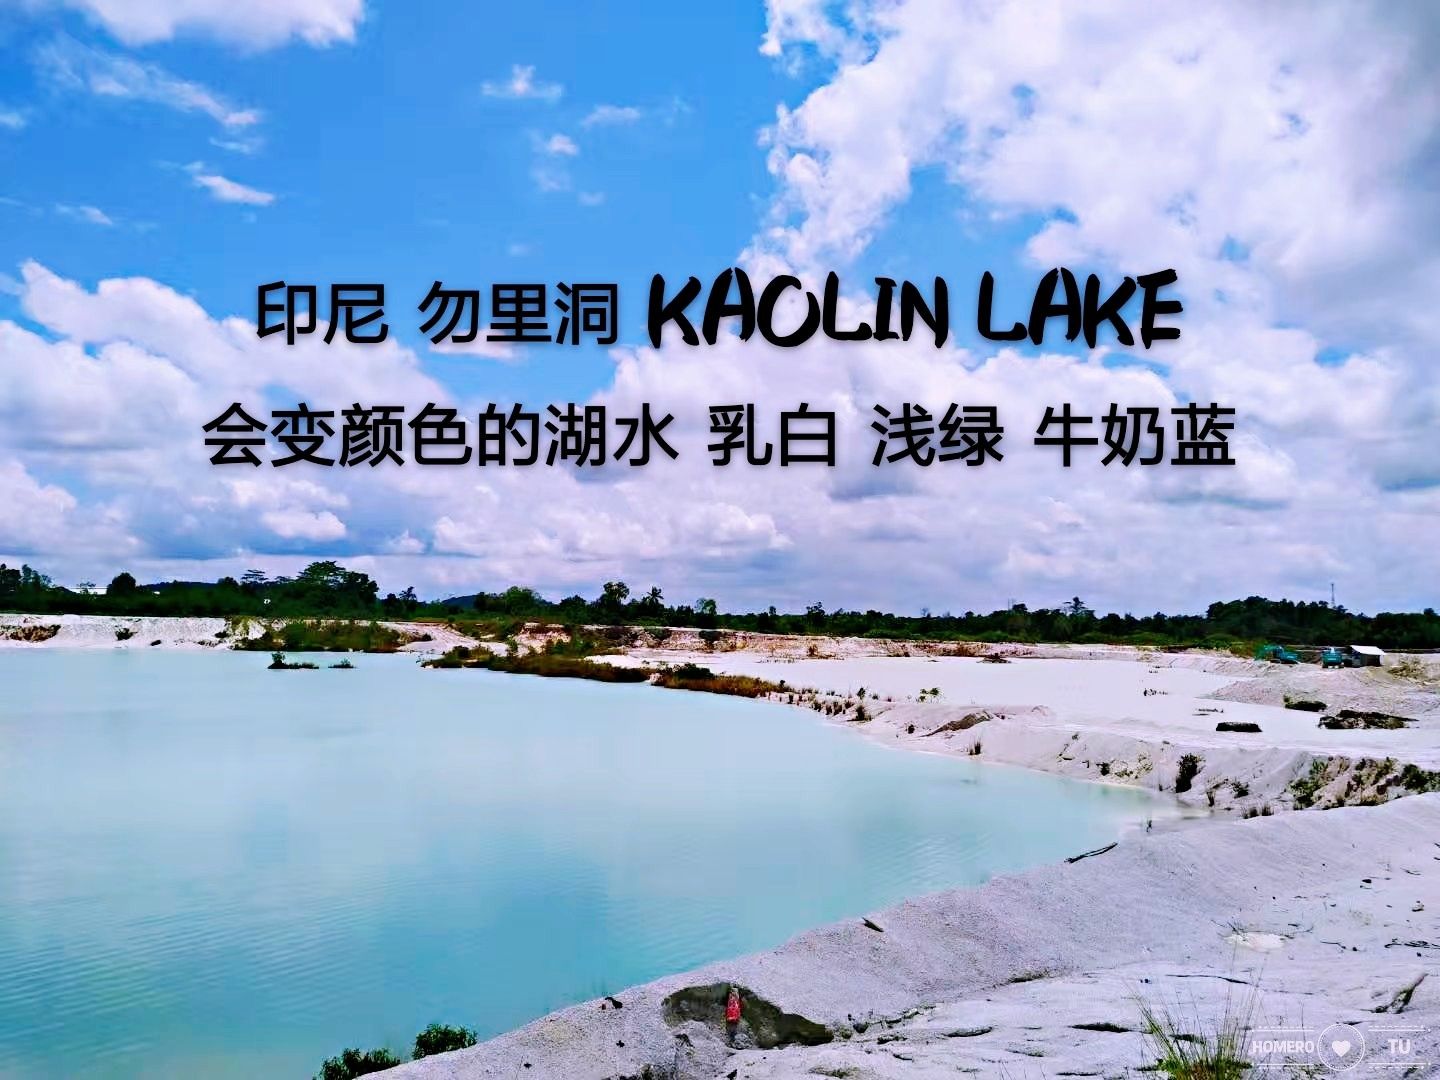 KAOLIN LAKE，这样的一座湖，本不该出现在这里。 湖水会随天气的变化而变化，有时候是乳白色，